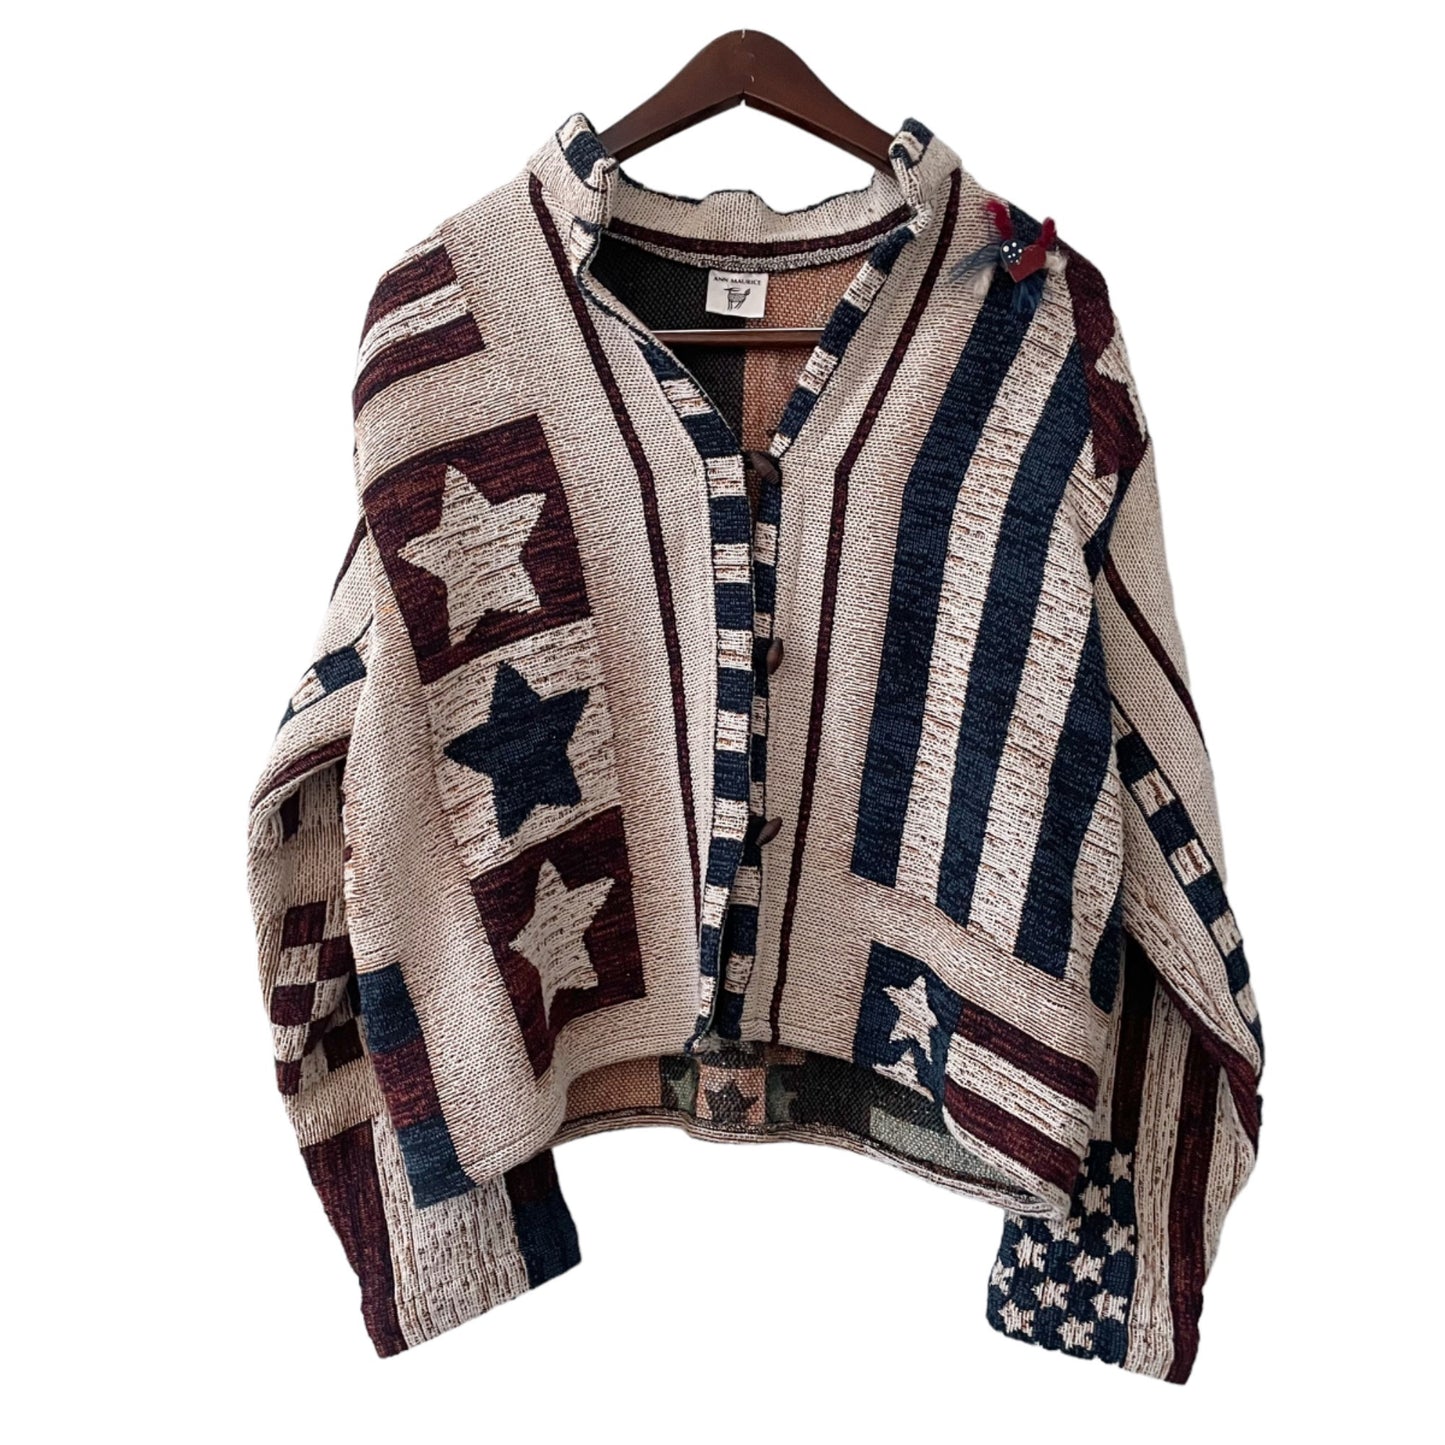 Ann Maurice Woven Americana Patriotic Sweater Jacket Women's XL Wood Buttons